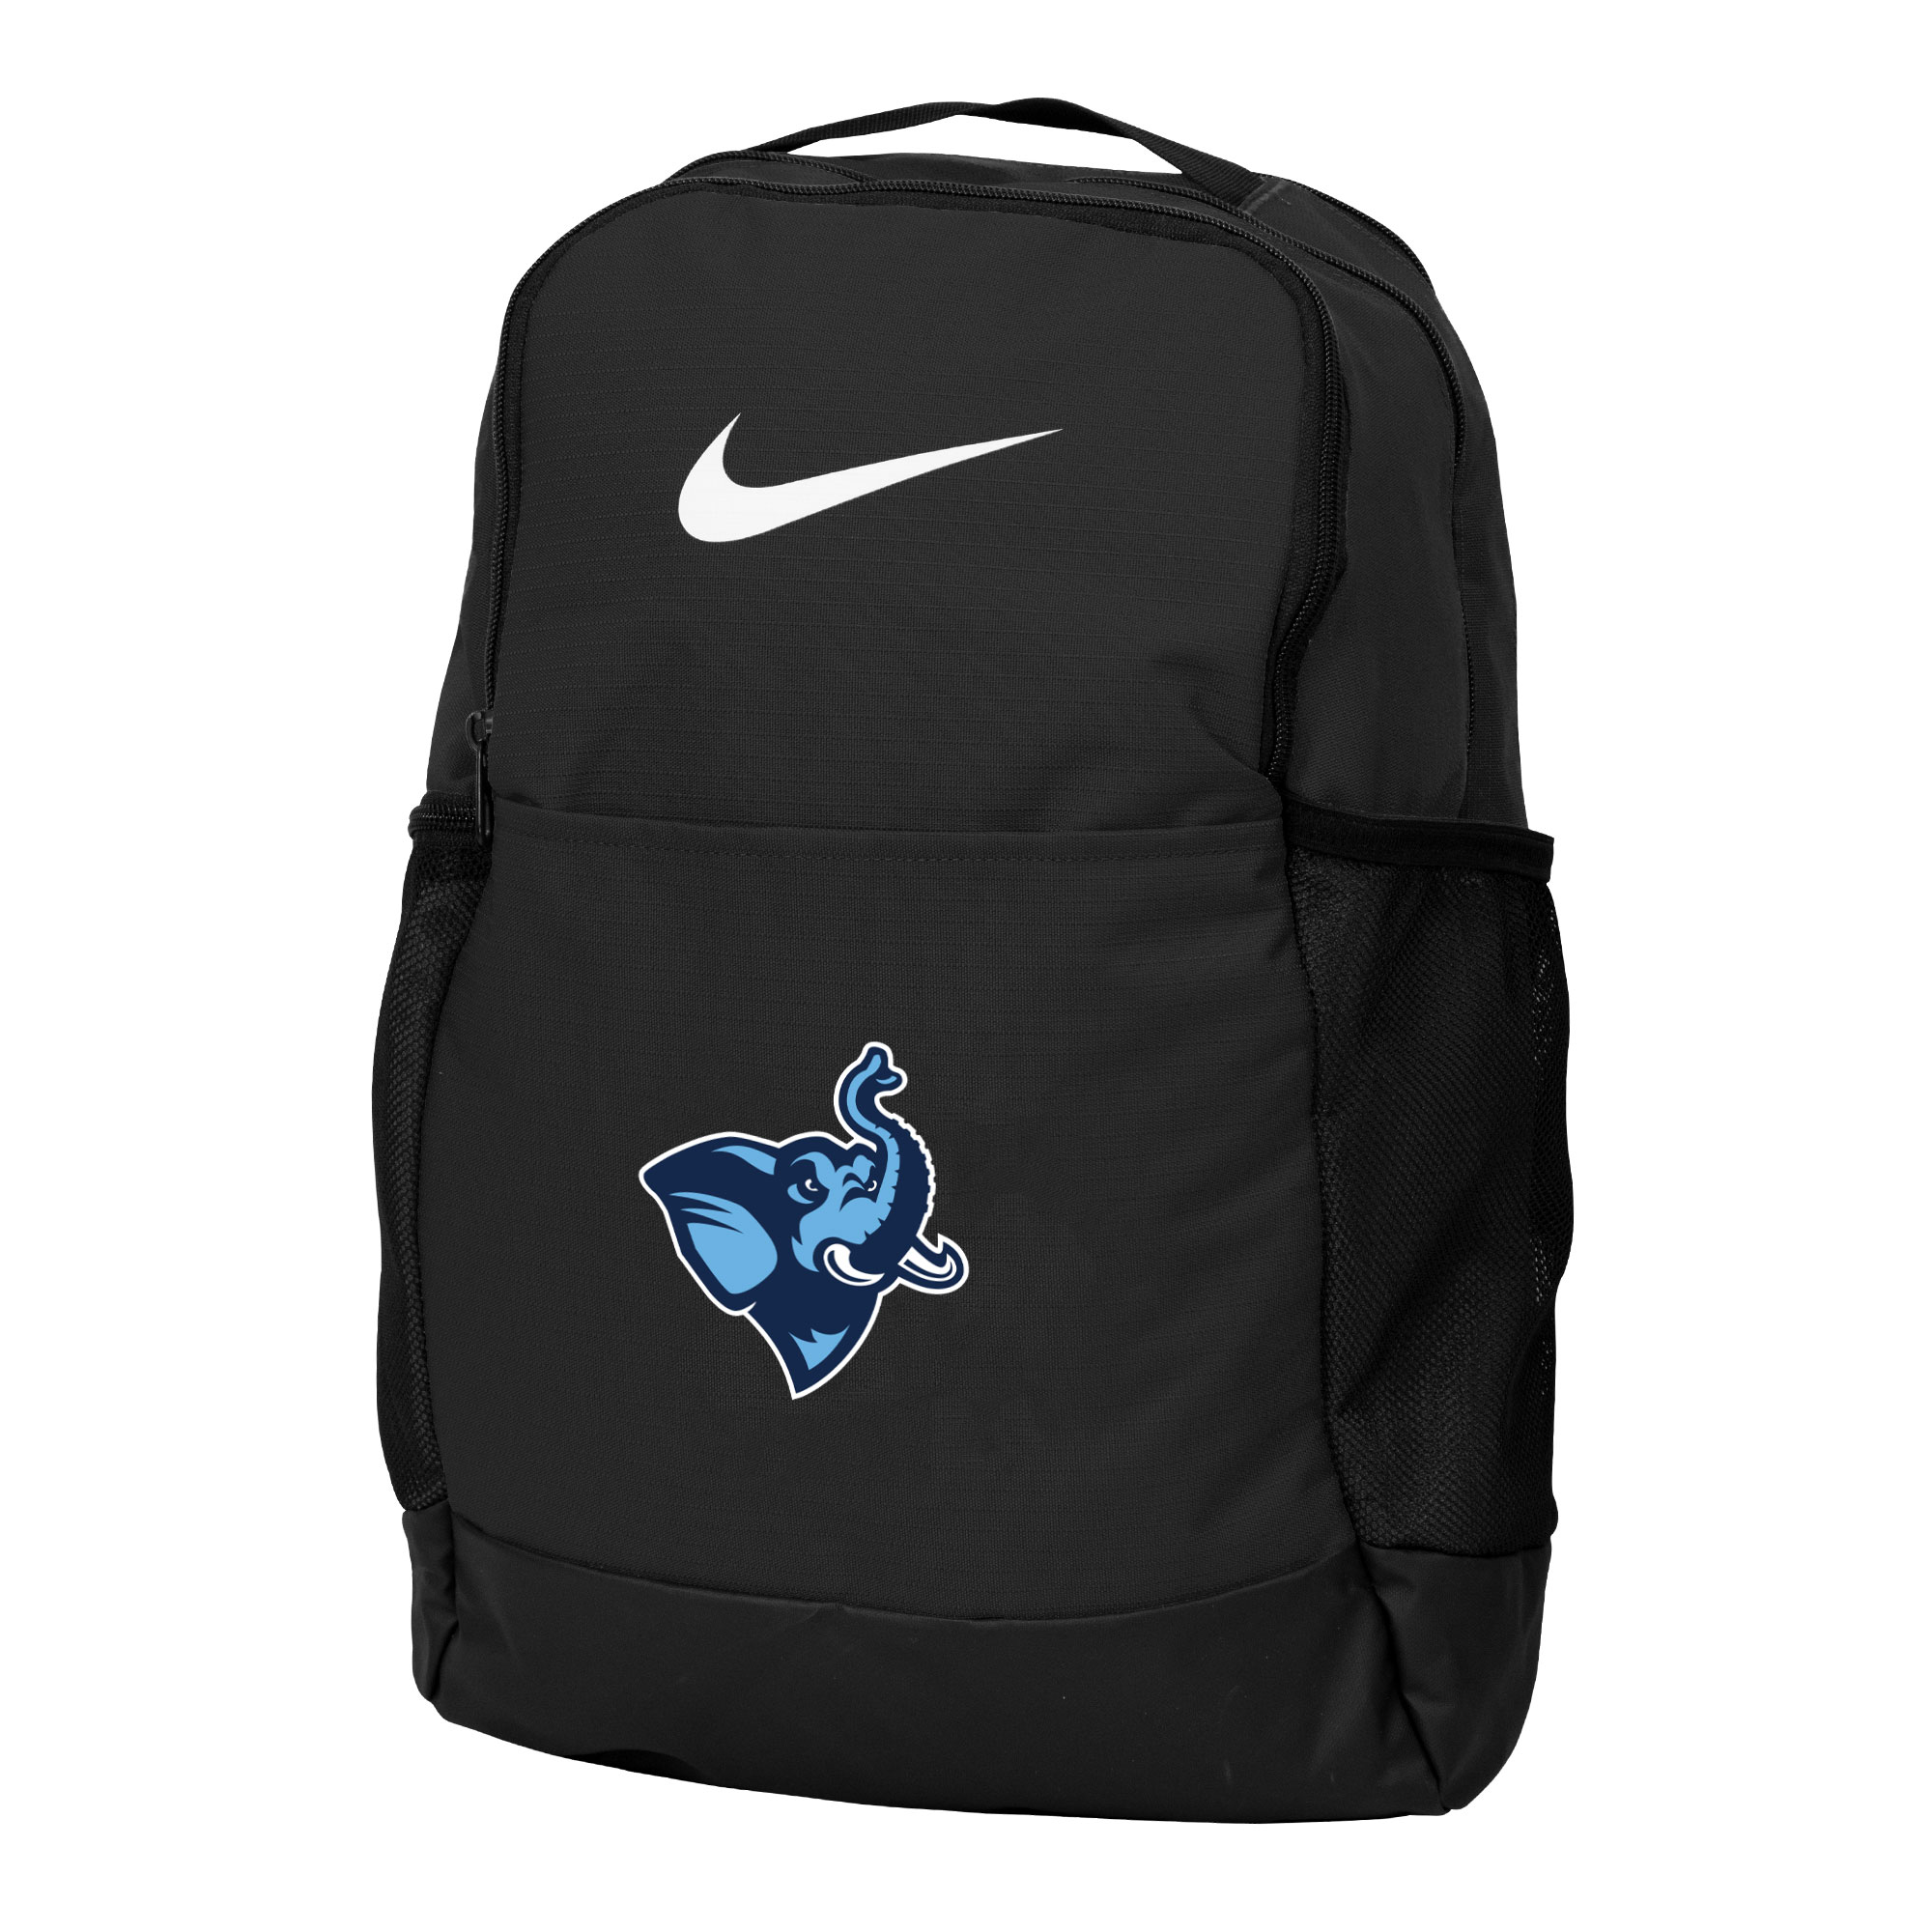 Tufts University Brasilia Backpack Backpacks and Bags